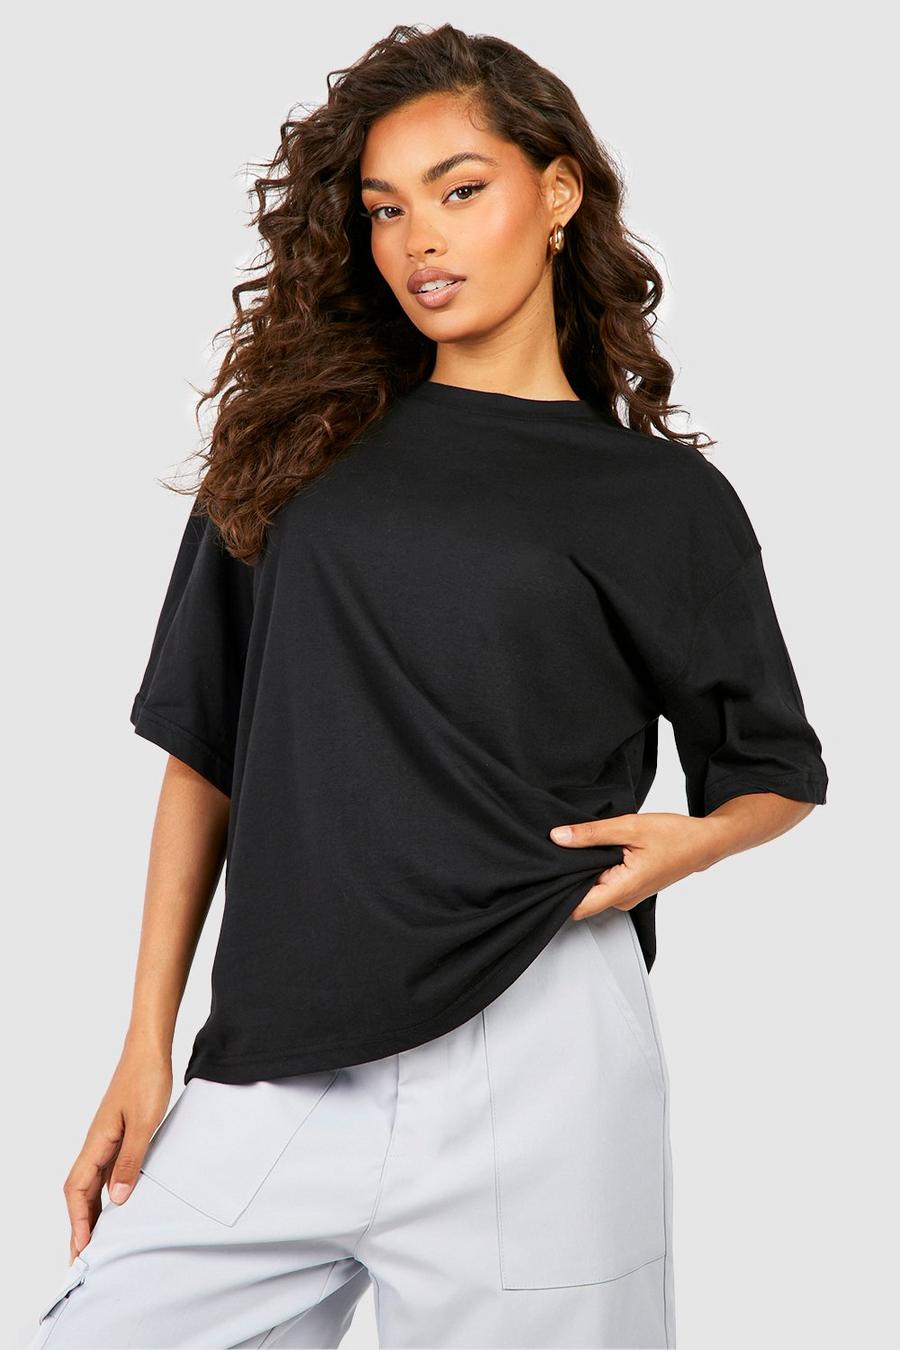 Oversized T Shirts | Women's Oversized Tops & T Shirts | boohoo UK